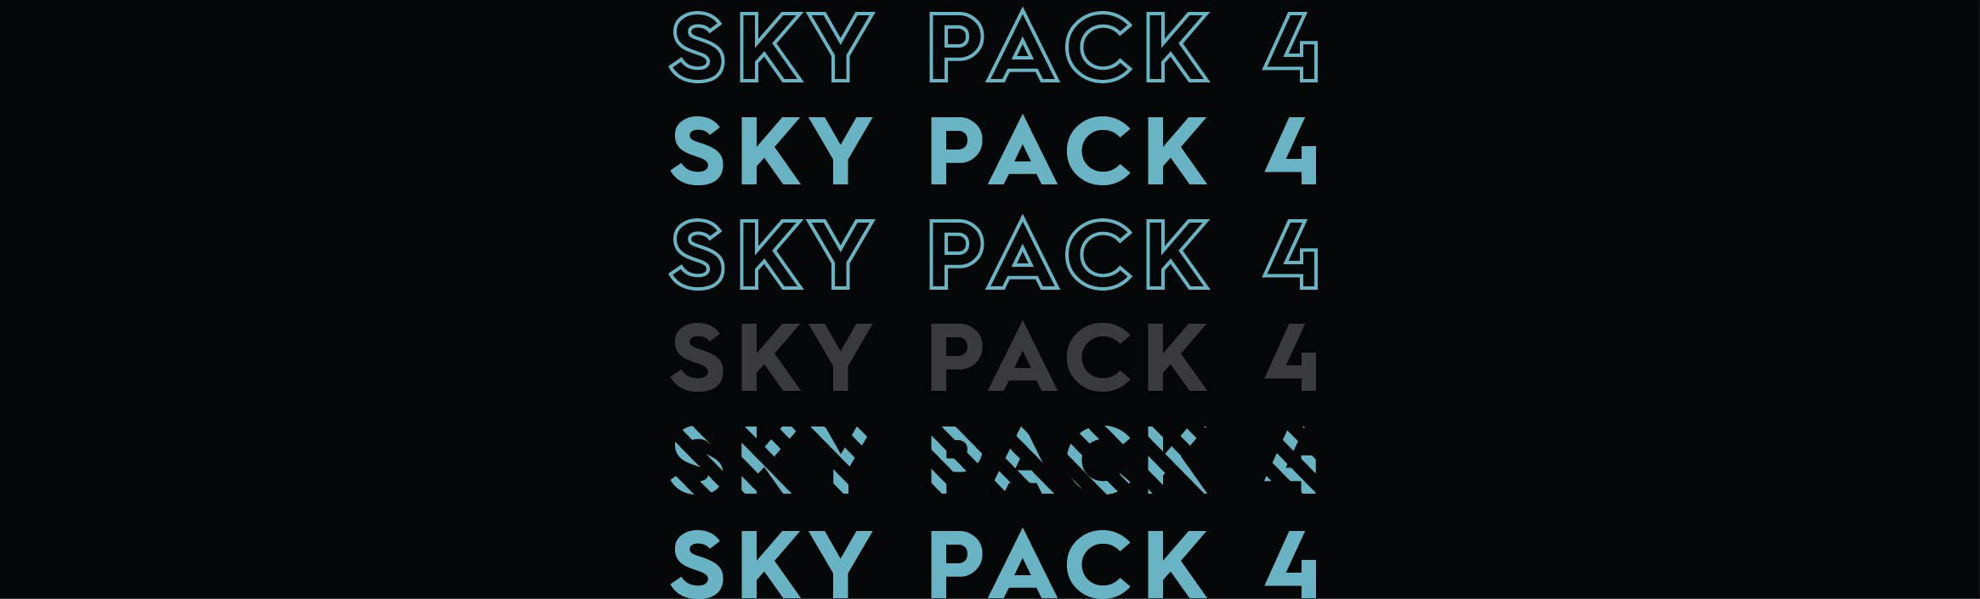 sky pack 4 image